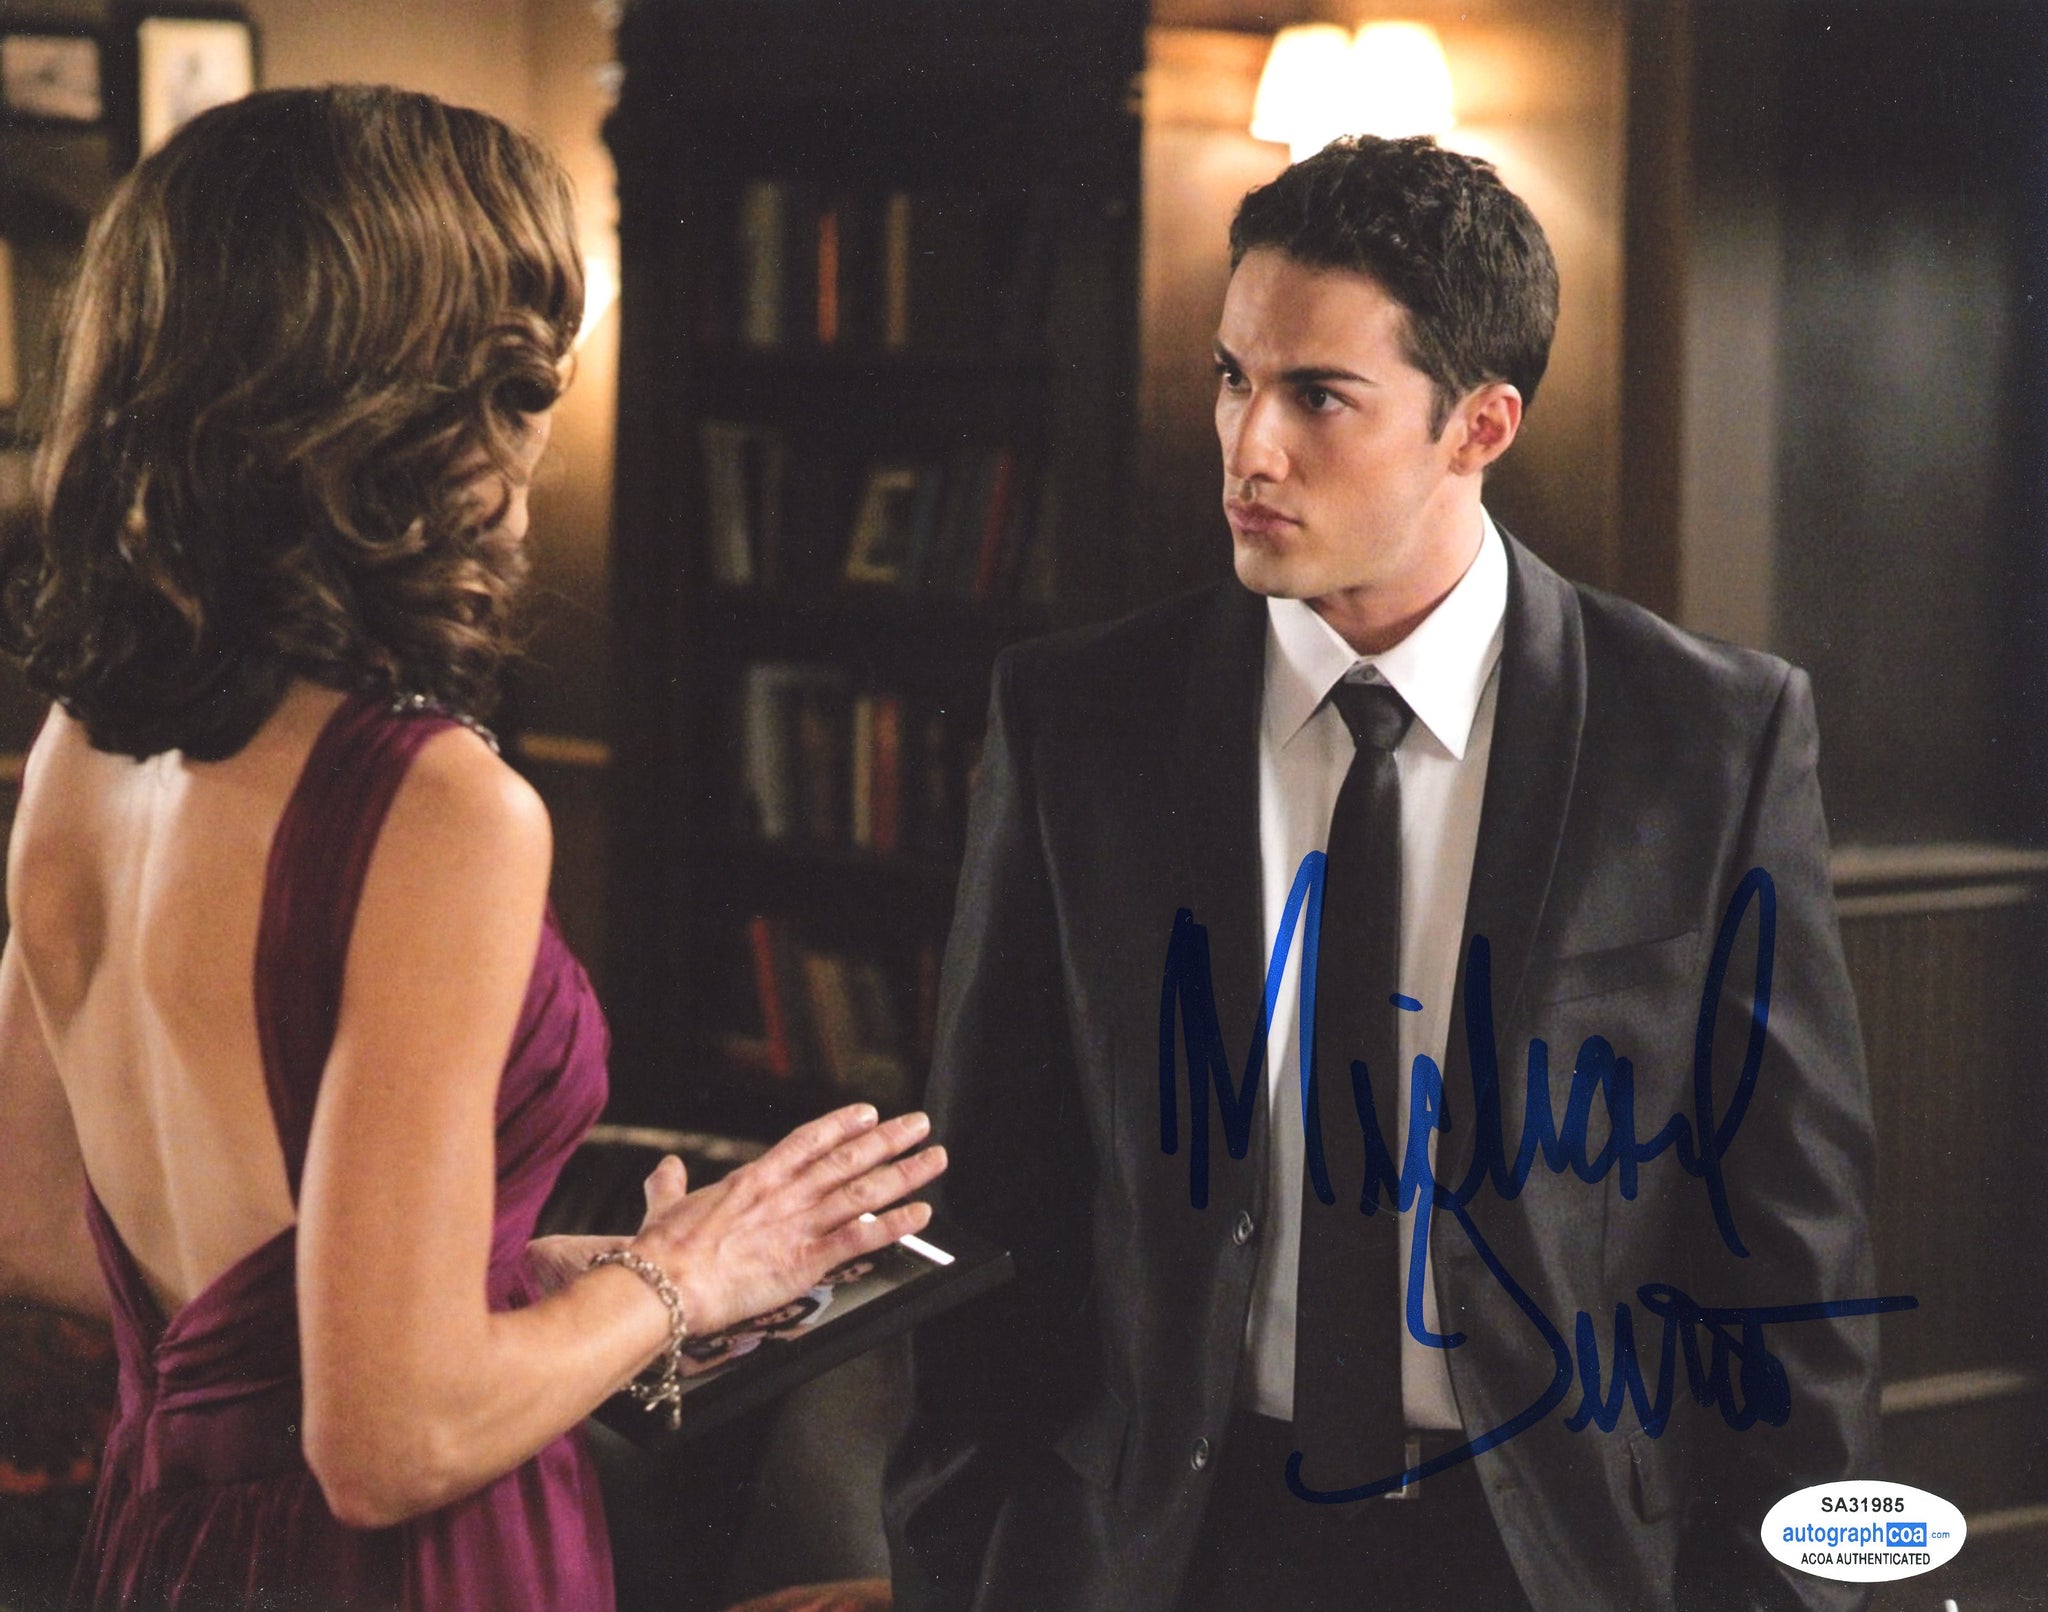 Michael Trevino Vampire Diaries Signed Autograph 8x10 Photo ACOA #2 - Outlaw Hobbies Authentic Autographs